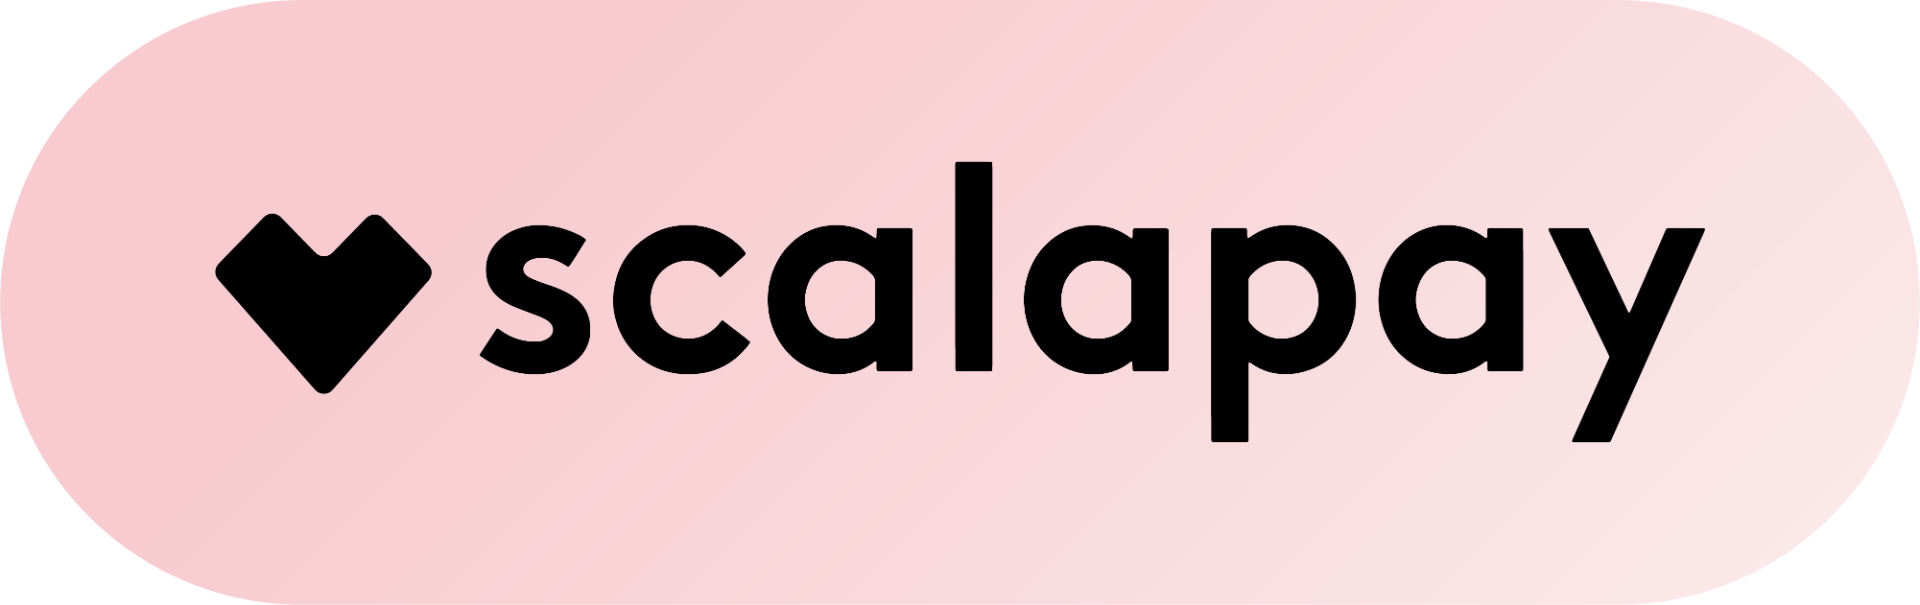 scalapay